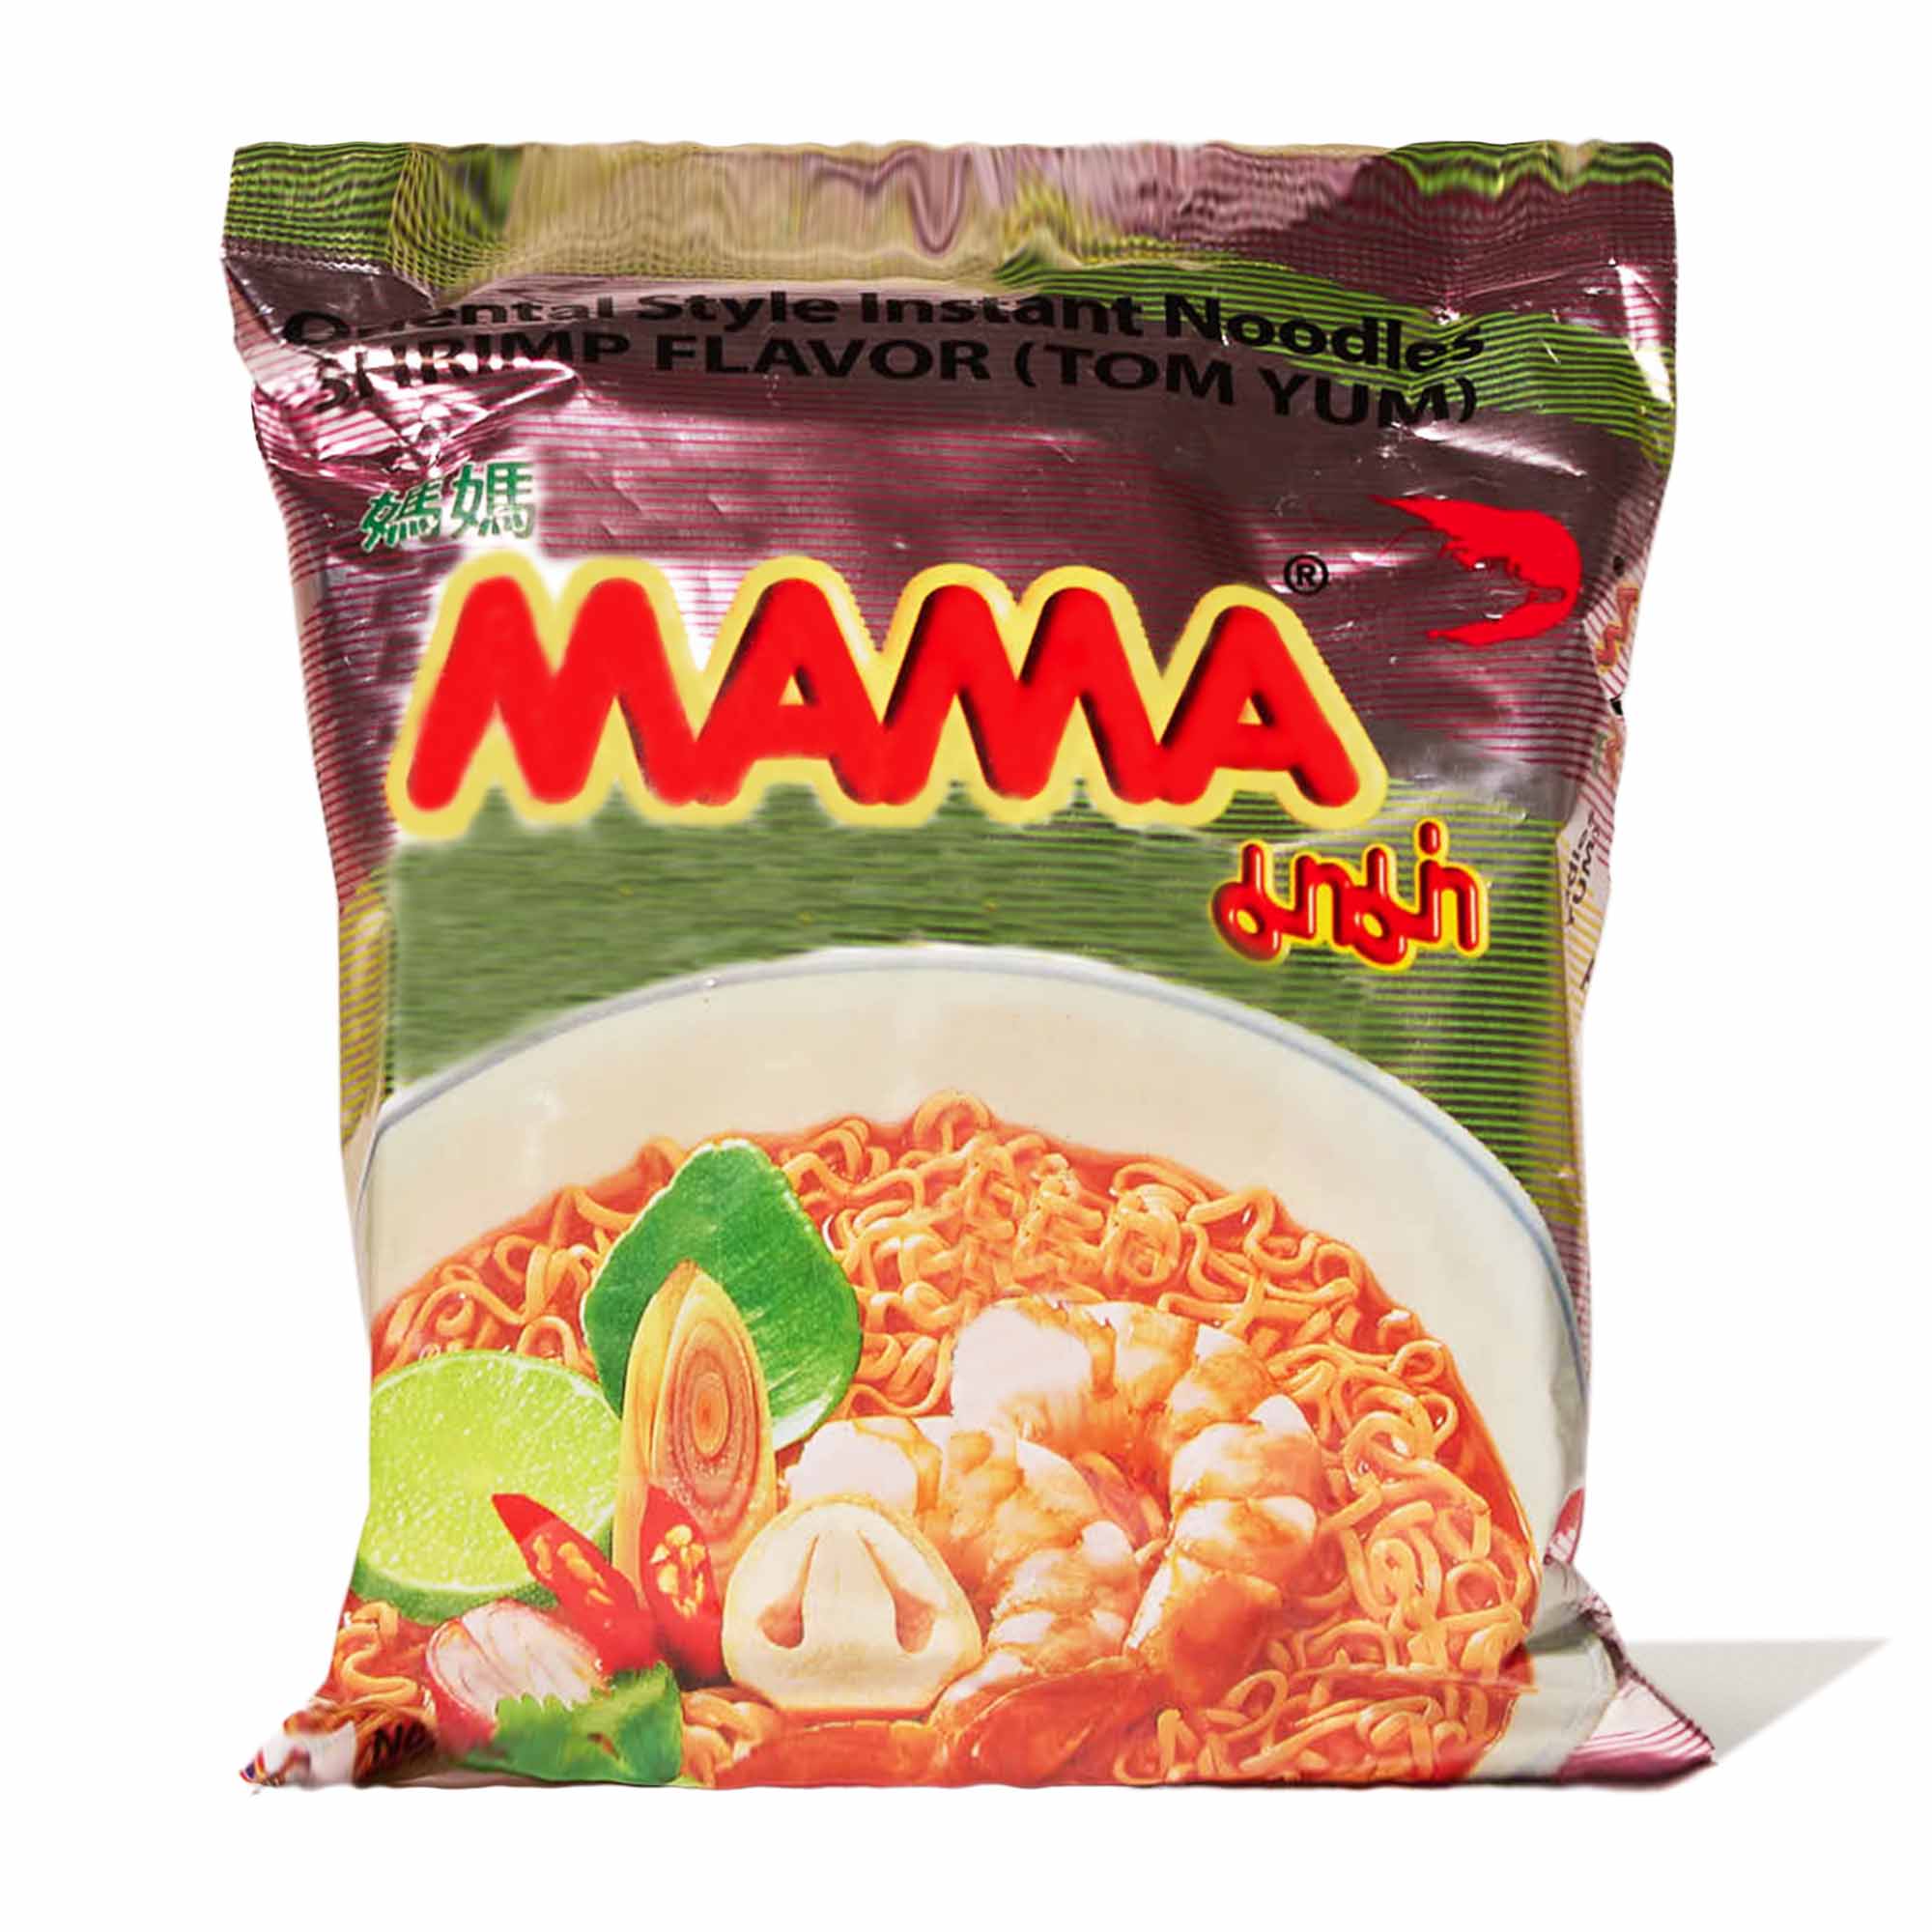 MAMA Instant Chicken Cup Noodles, 2.47 Oz